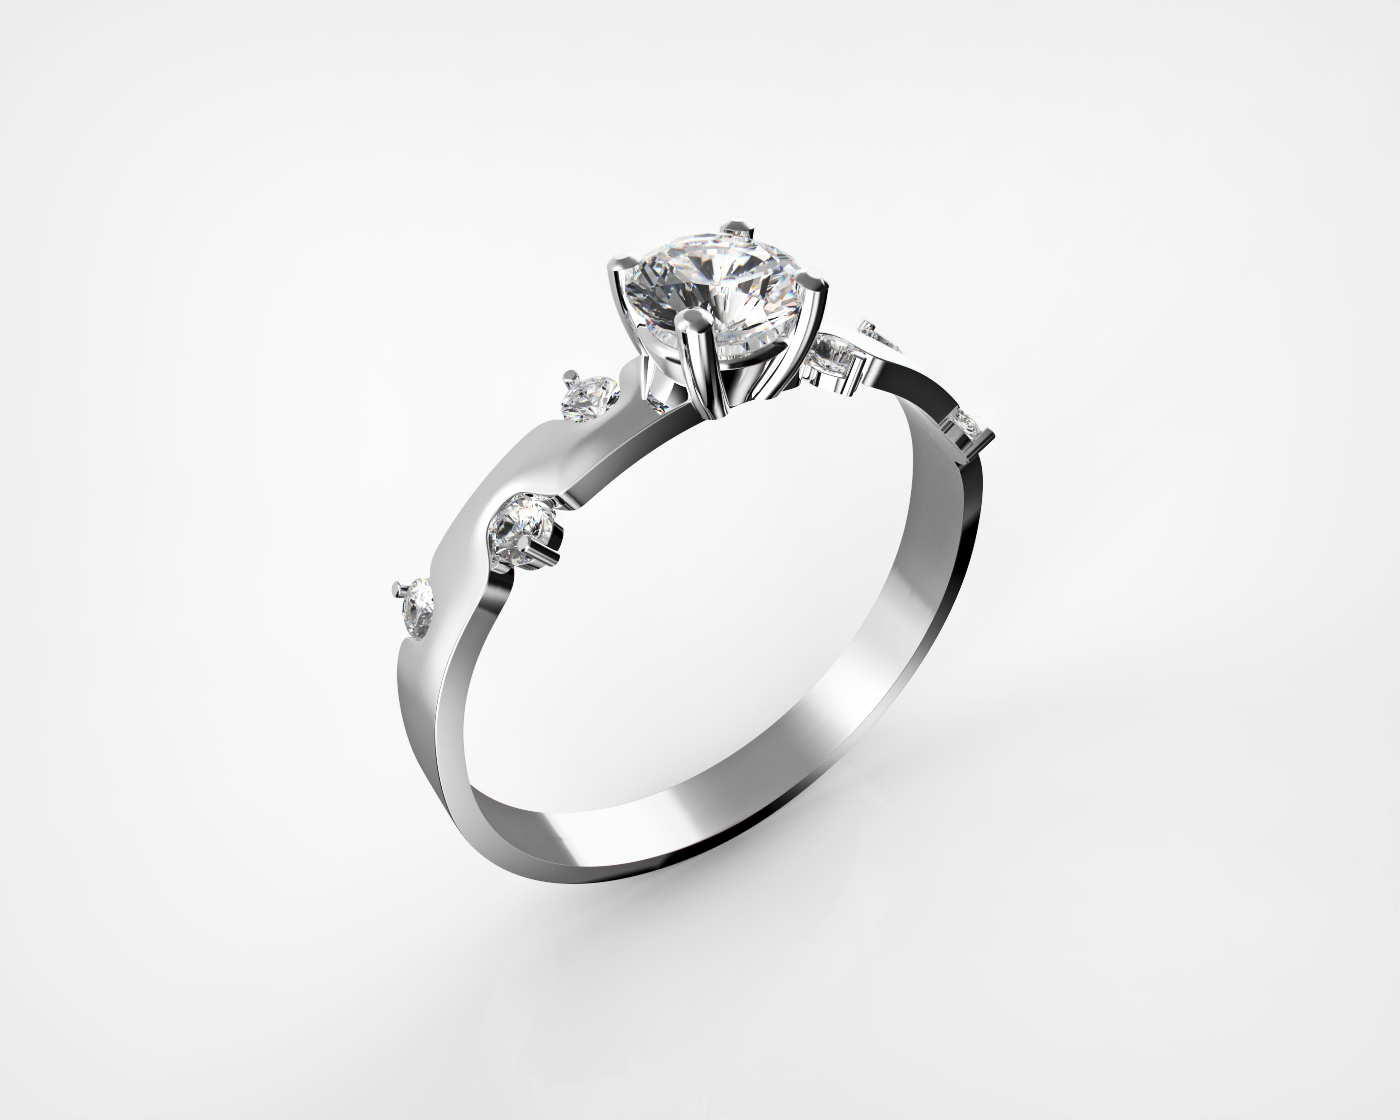 ring product Vizualization jewelry silver wedding